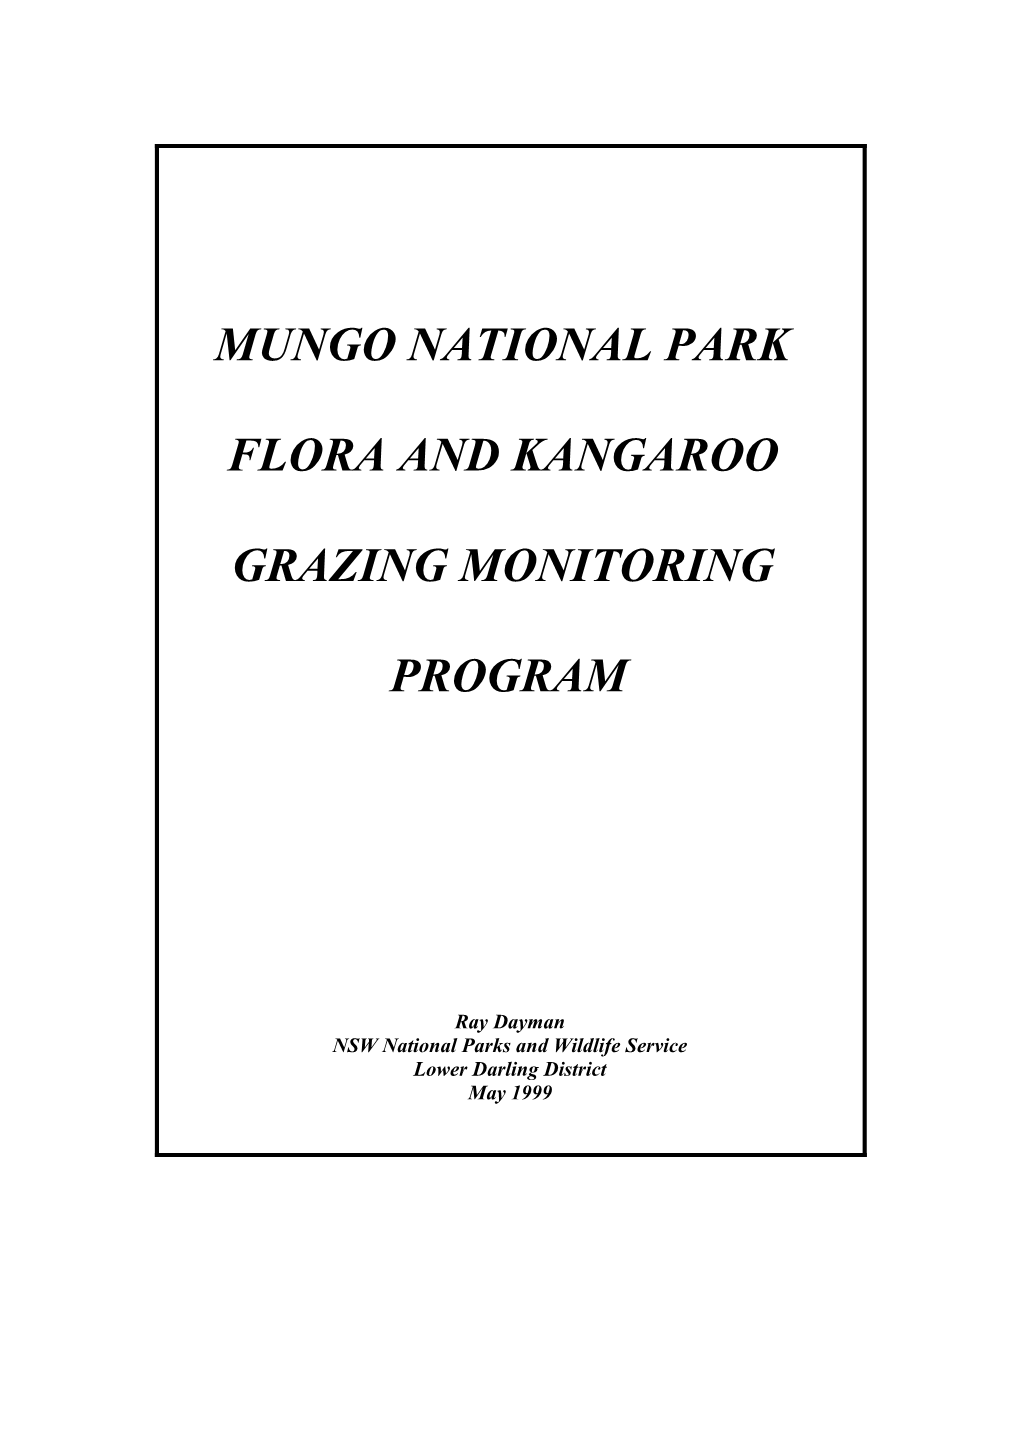 Mungo National Park Flora and Kangaroo Grazing Monitoring Program